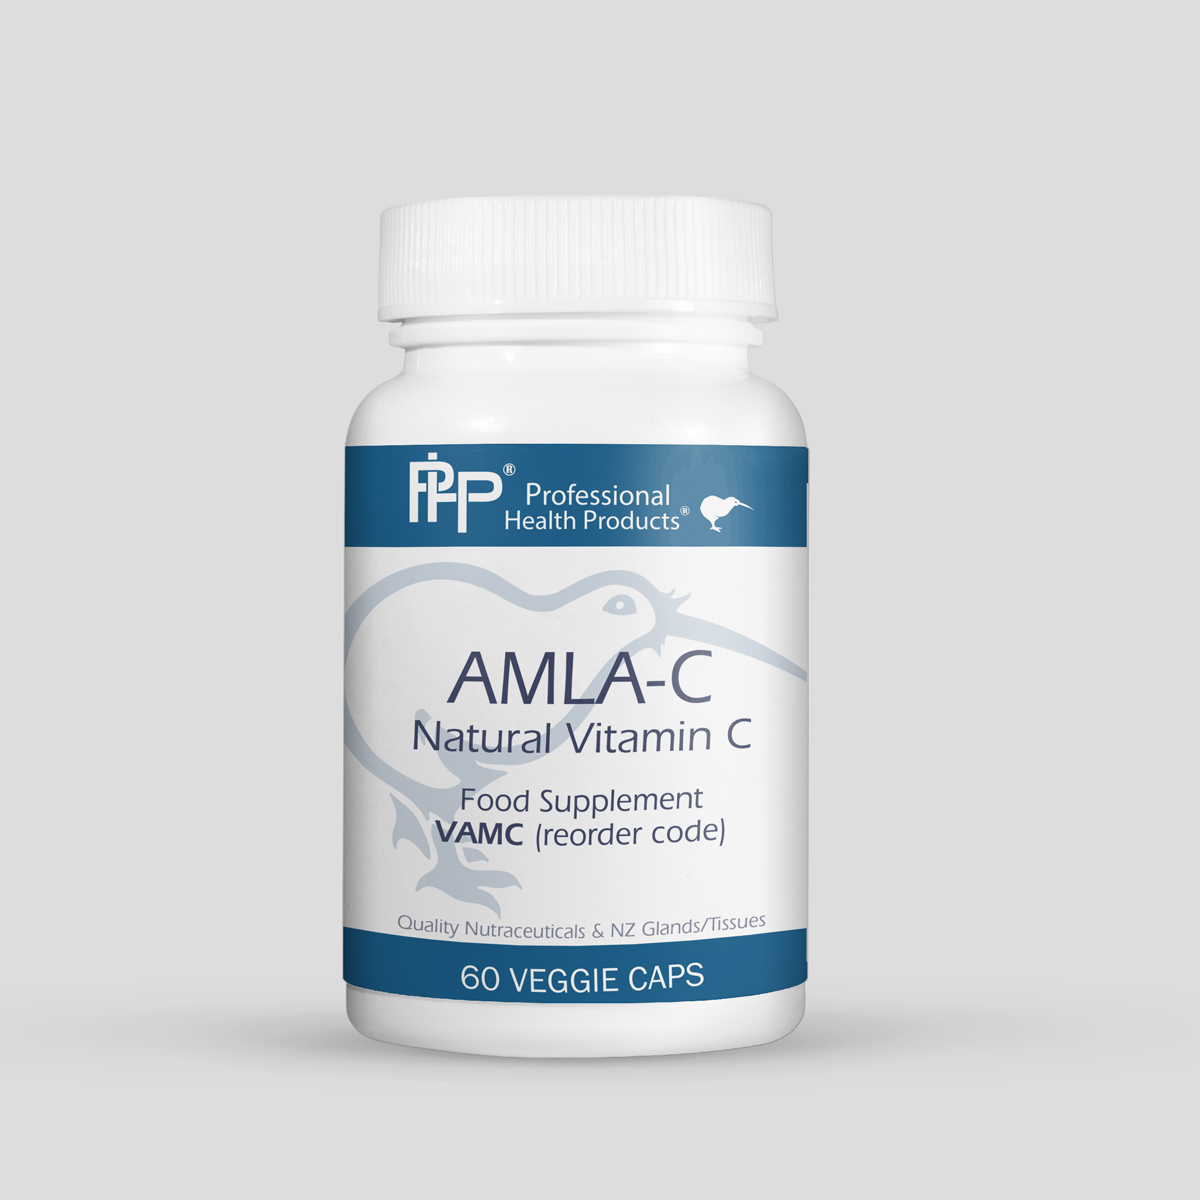 AMLA-C (Natural Vitamin C)